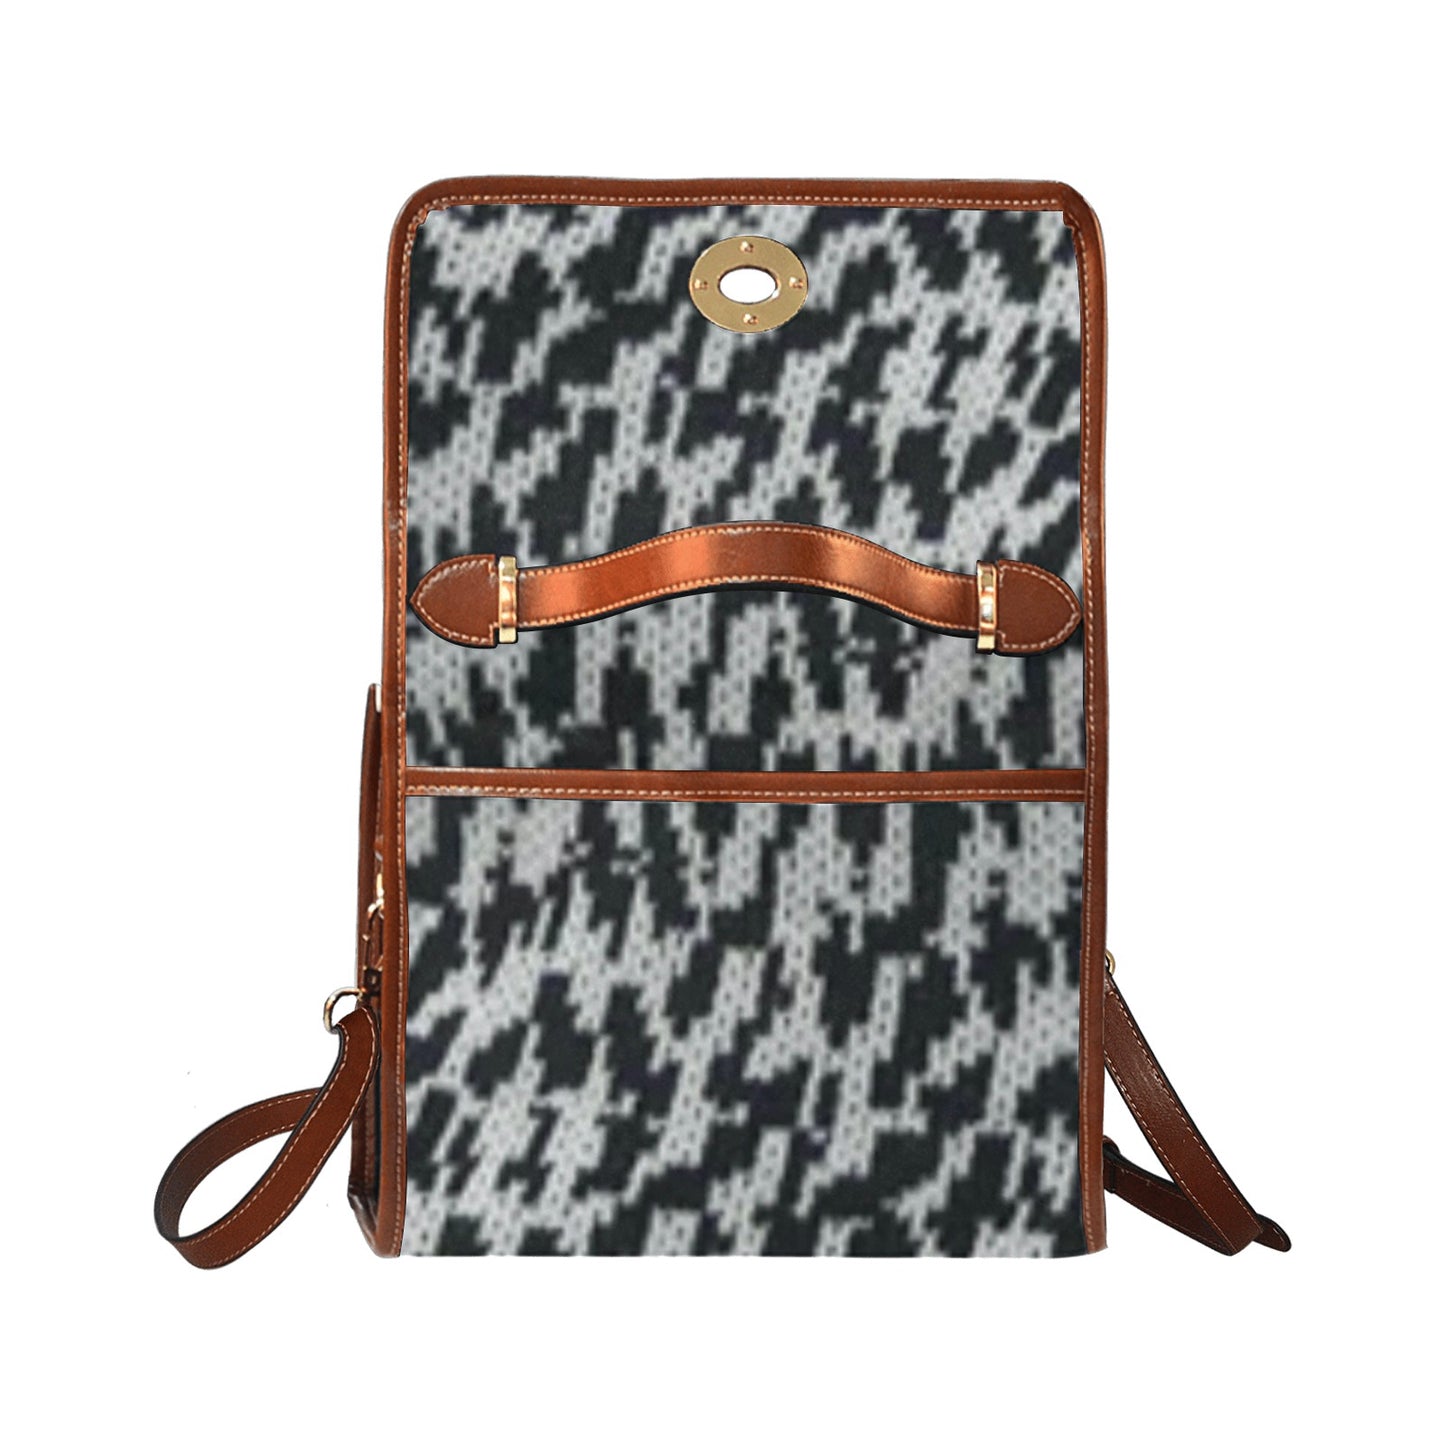 fz plaid handbag all over print waterproof canvas bag(model1641)(brown strap)